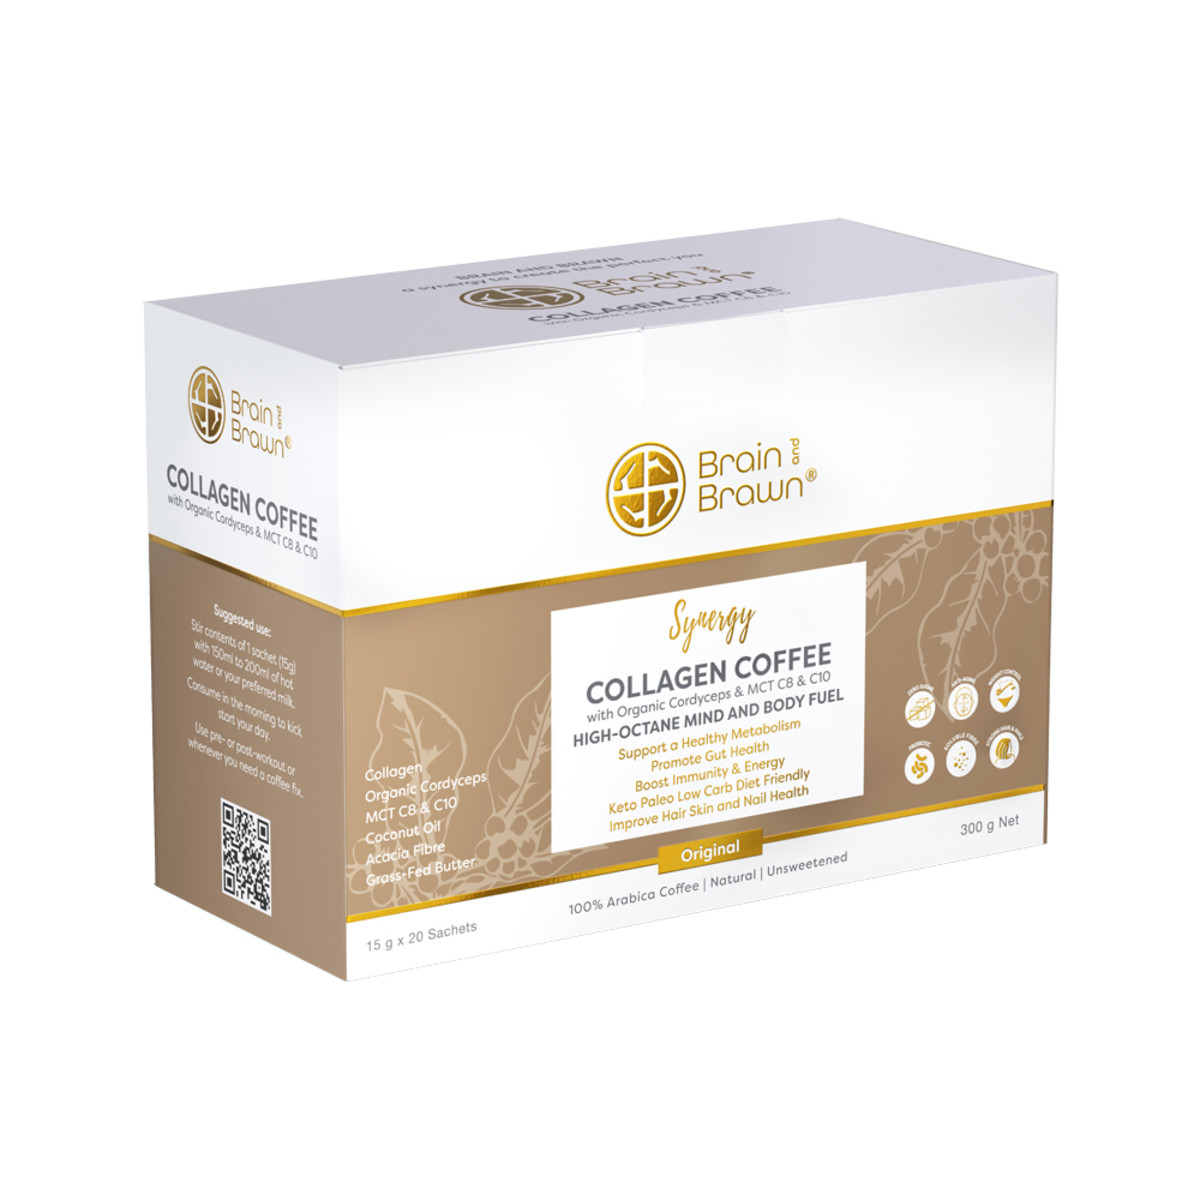 BRAIN AND BRAWN - Collagen Keto Coffee Synergy